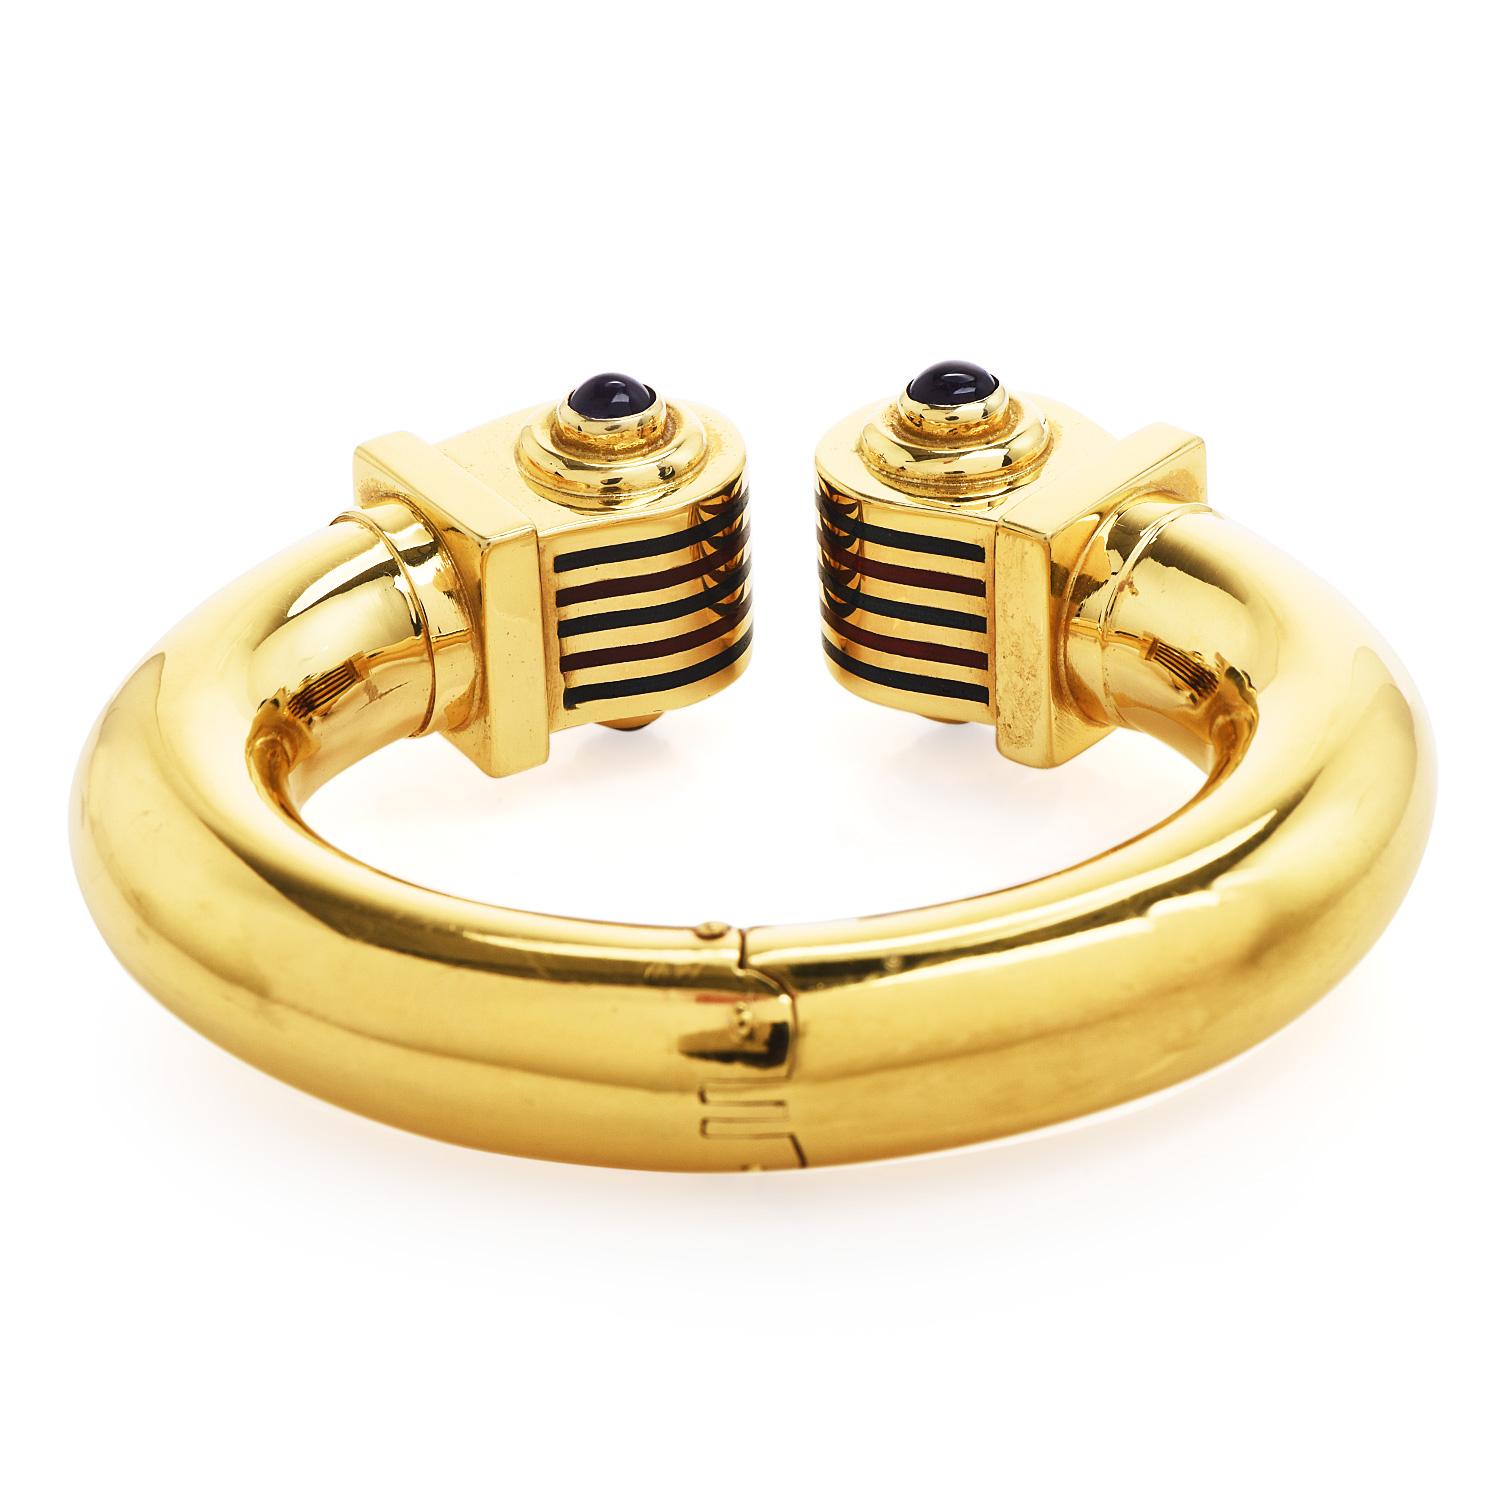  Estate High polish Italian Gold Amethyst Enamel Cuff Bangle  Bracelet  In Excellent Condition For Sale In Miami, FL